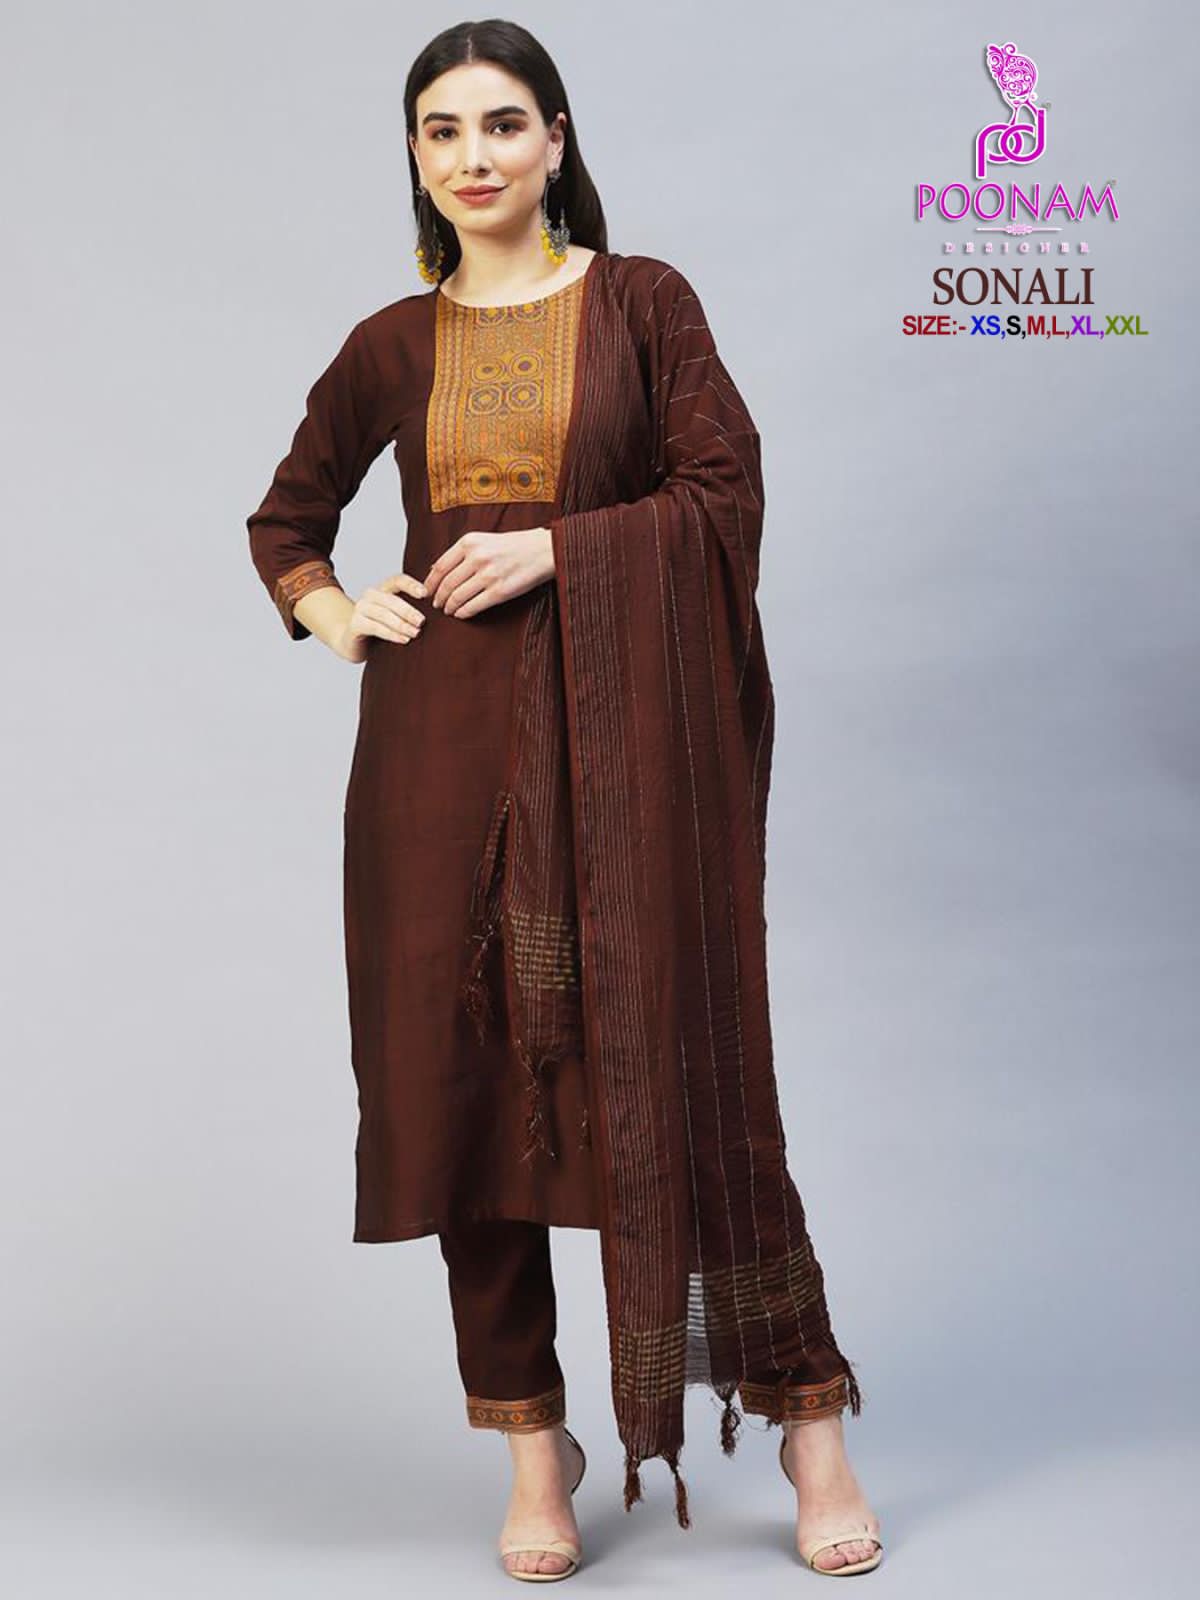 Poonam Sonali collection 1